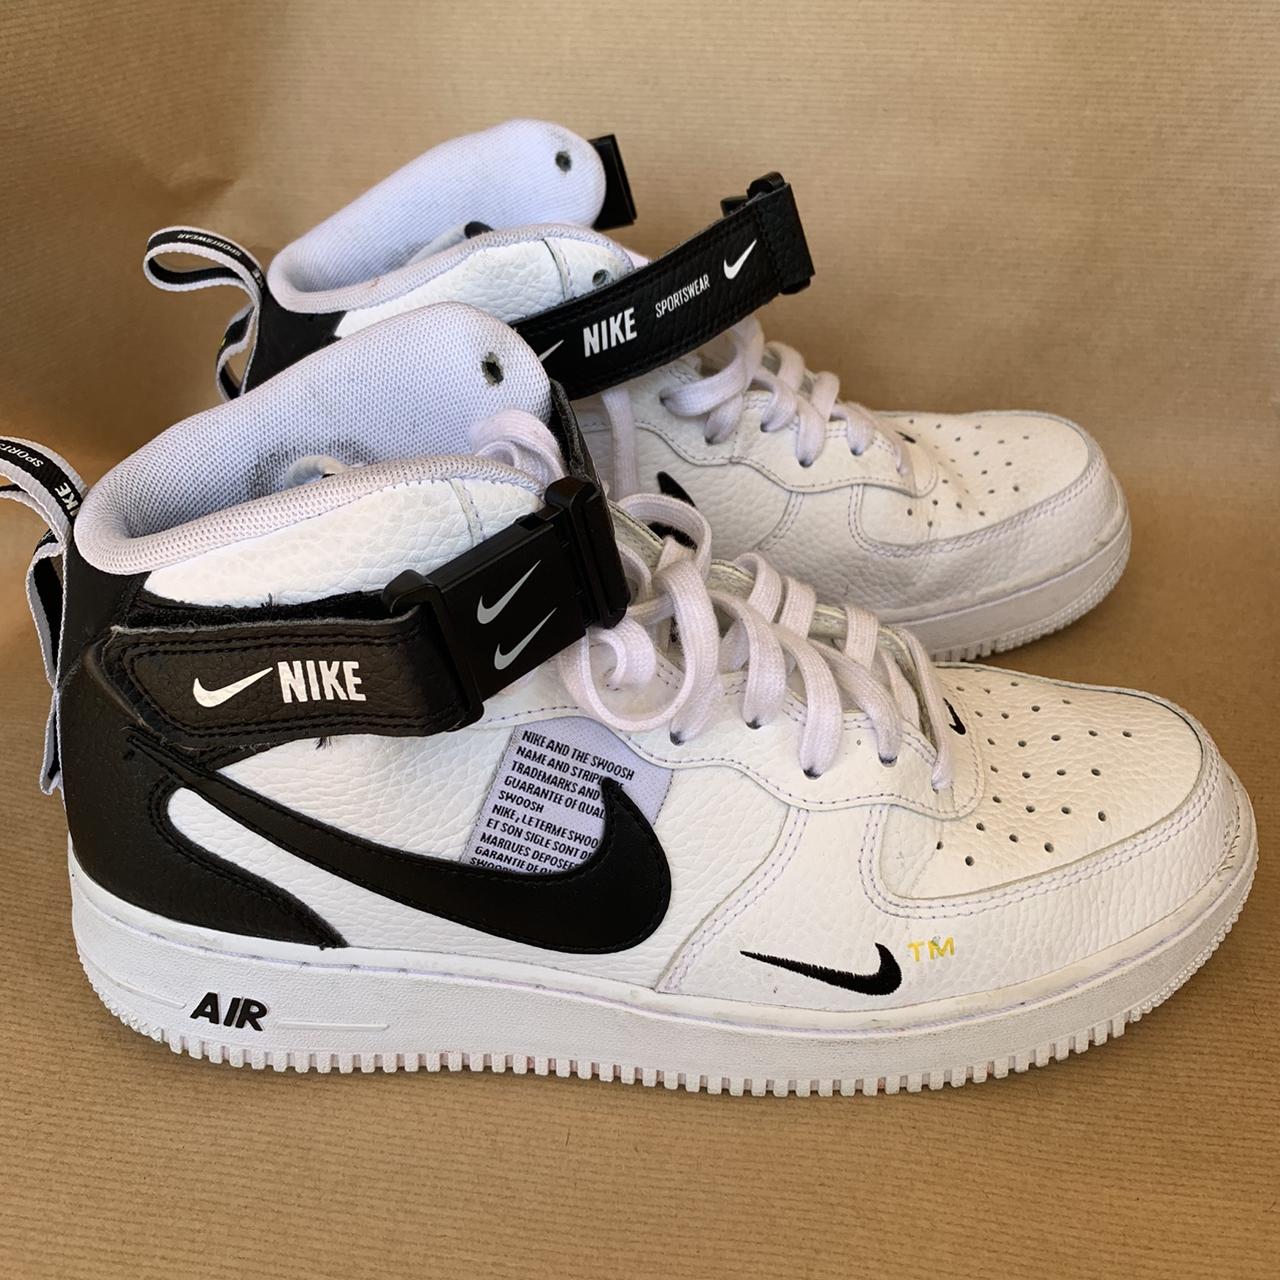 Nike x cdg x supreme Airforce 1 Super rare shoe, - Depop